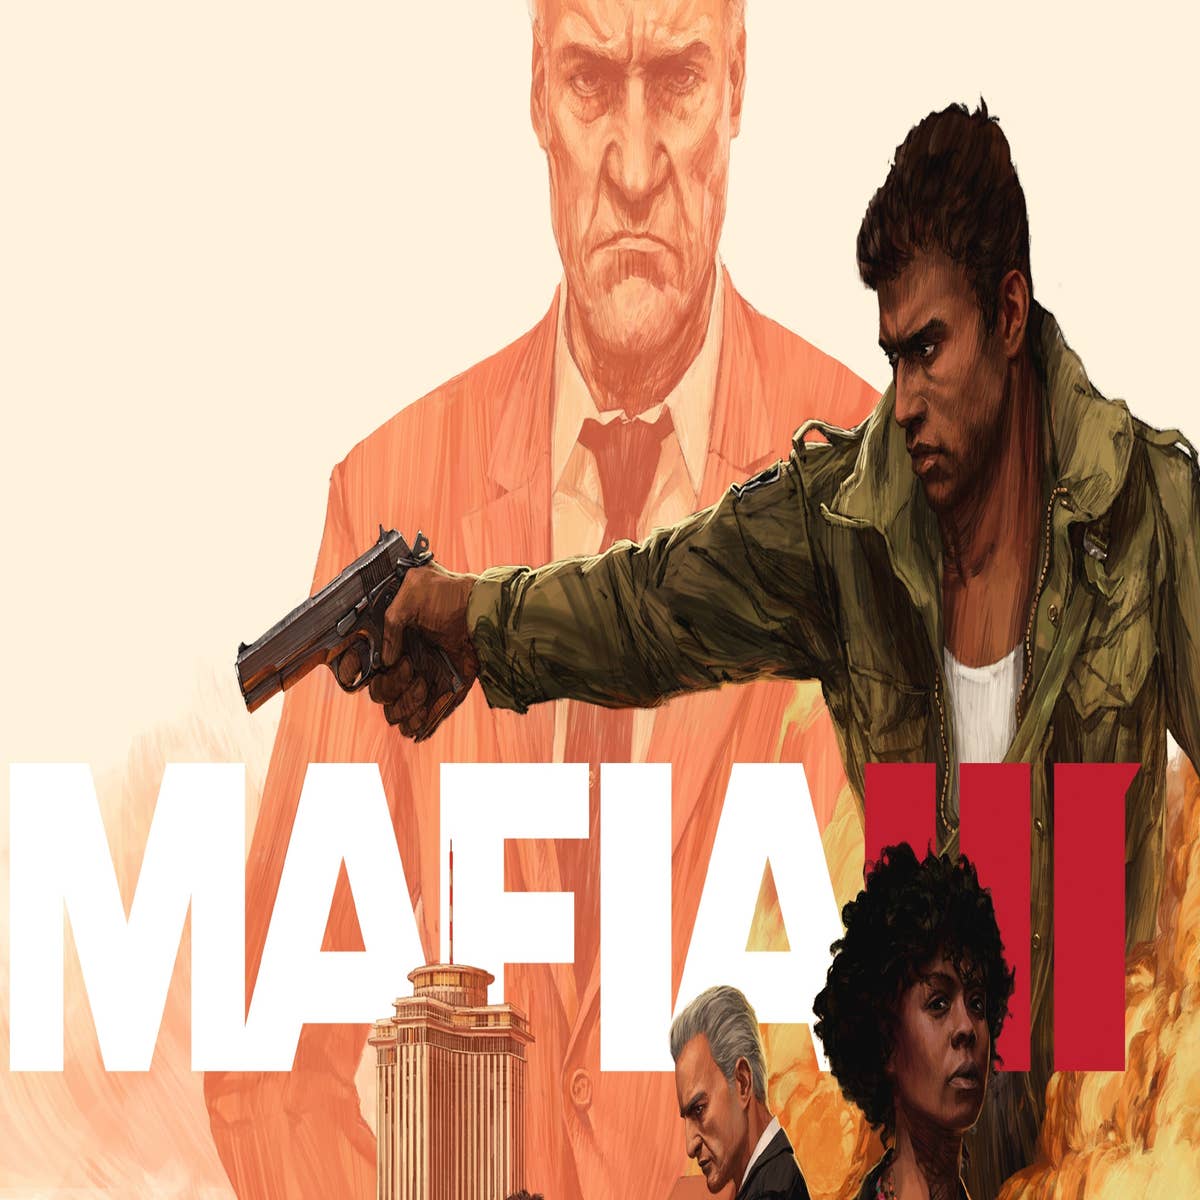 Mafia 3 Review  New Game Network